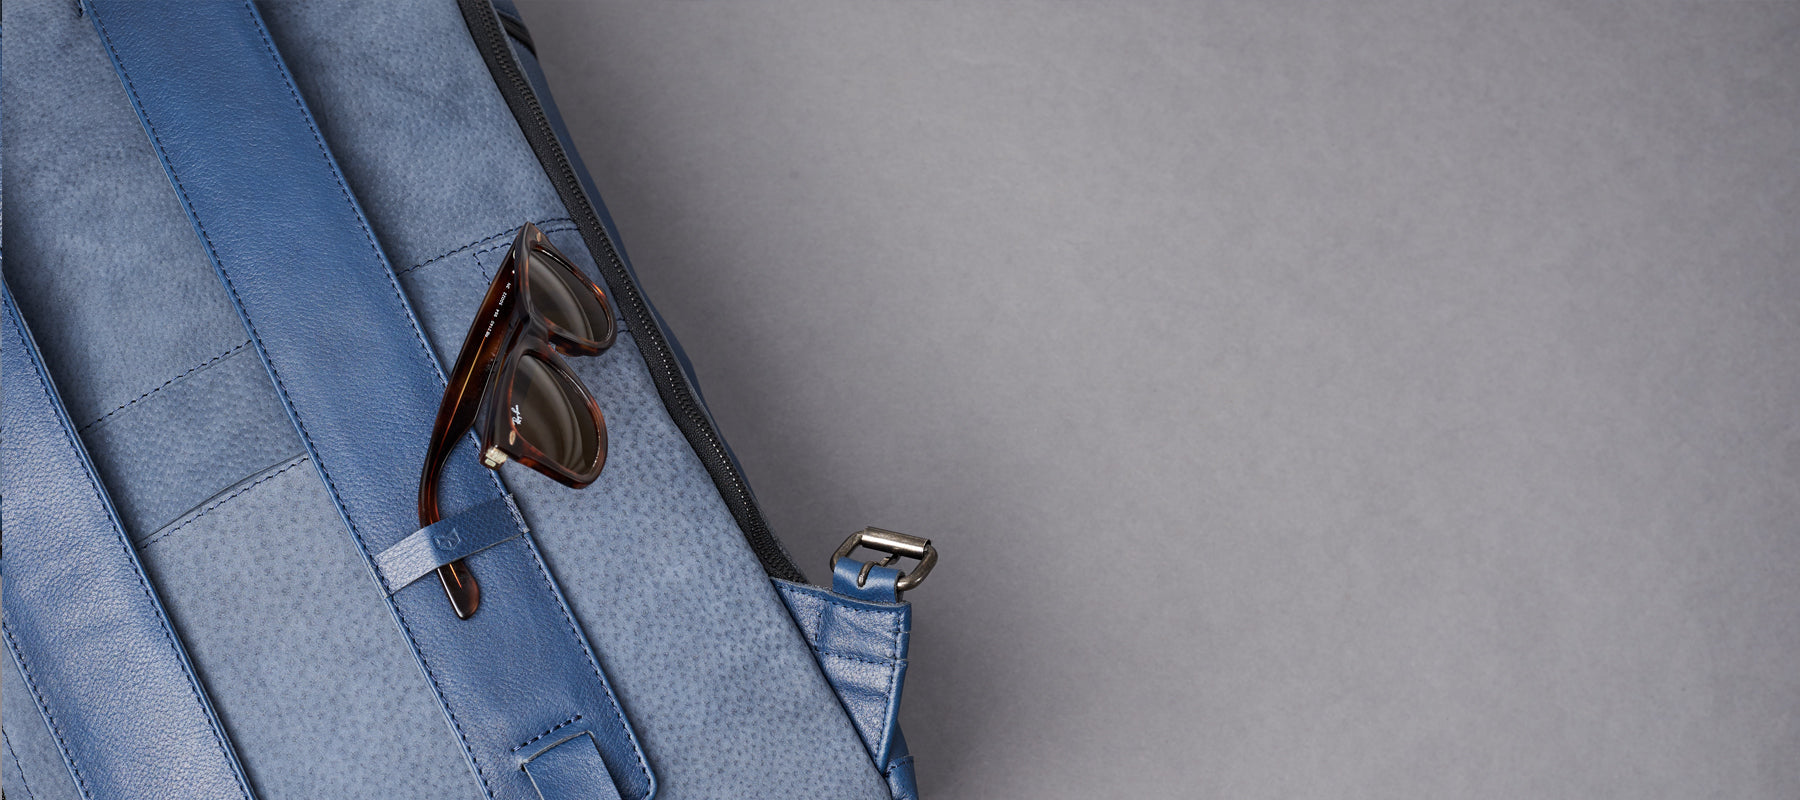 Eyewear holder. Banteng Travel Laptop Backpack by Capra Leather